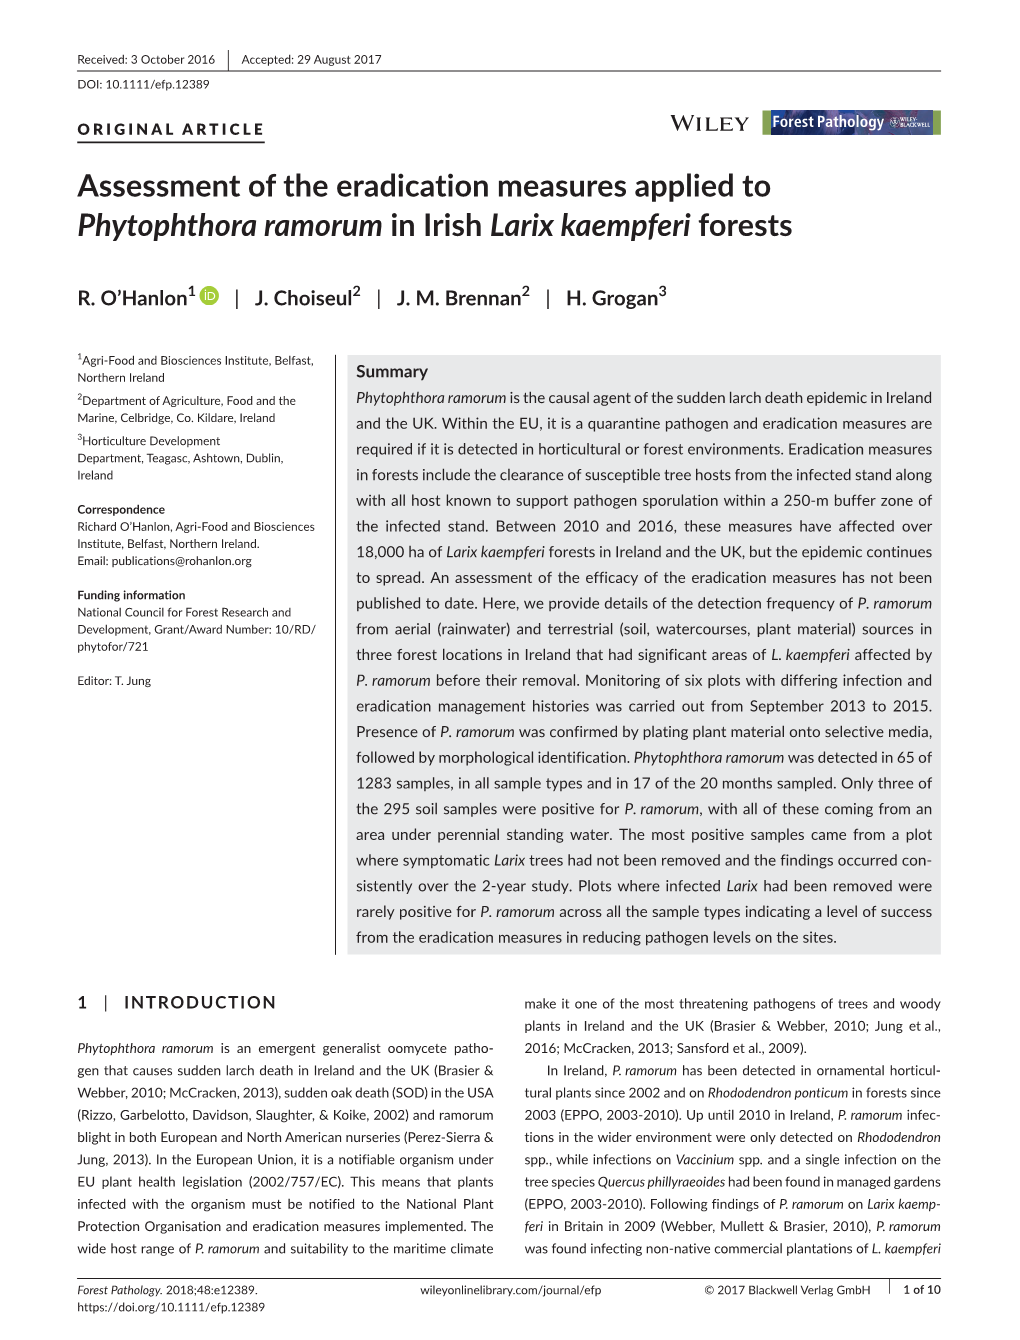 Assessment of the Eradication Measures Applied to Phytophthora Ramorum in Irish Larix Kaempferi Forests